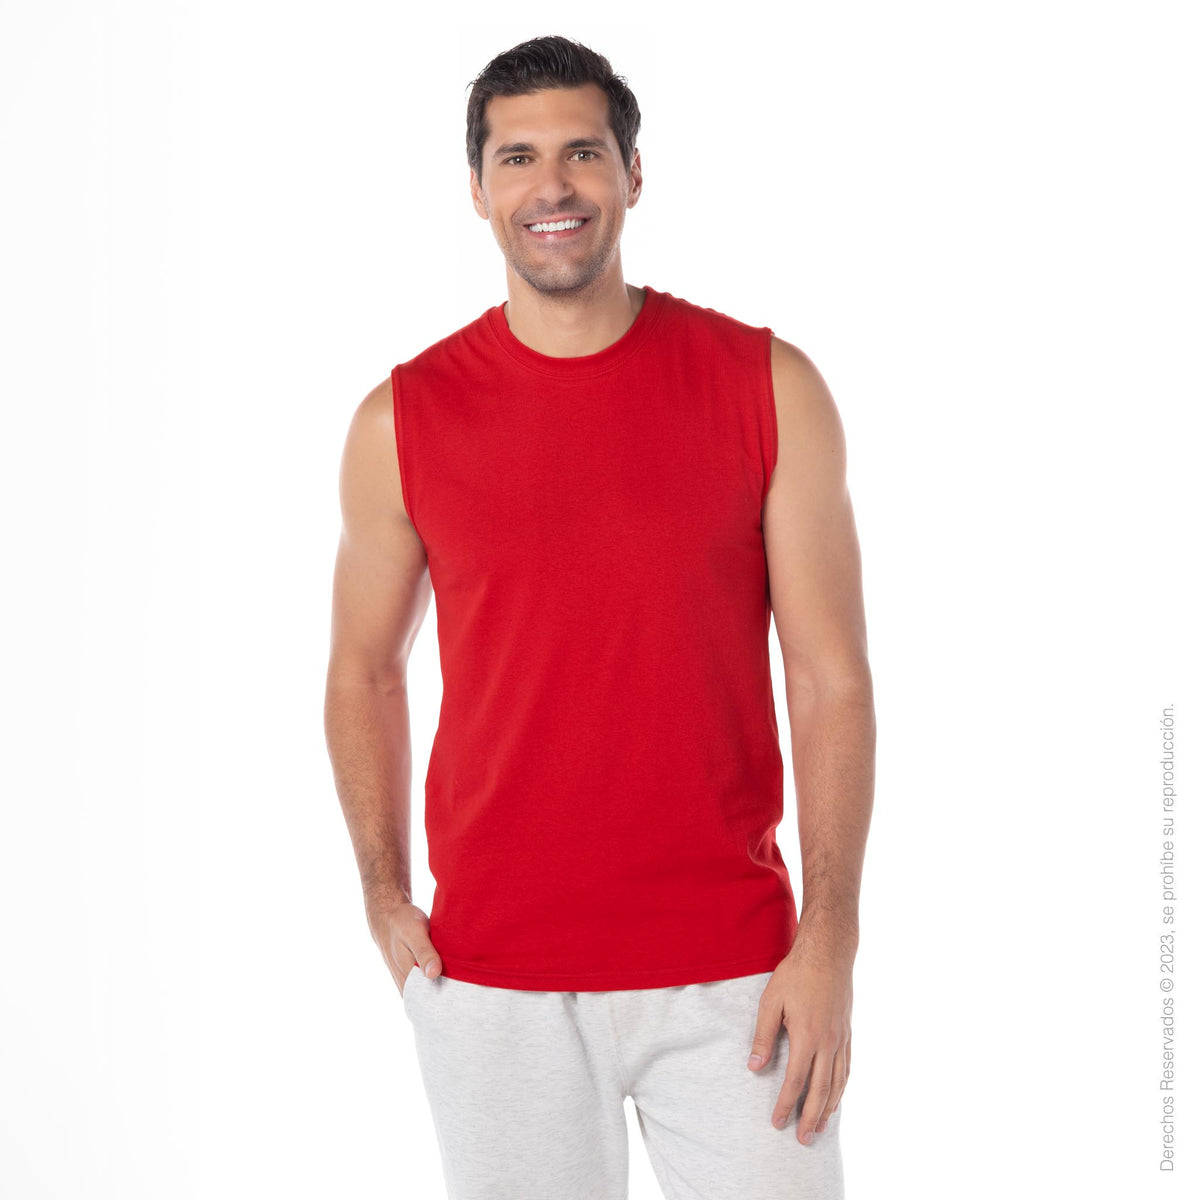 Red Tank Tops & Sleeveless Shirts.